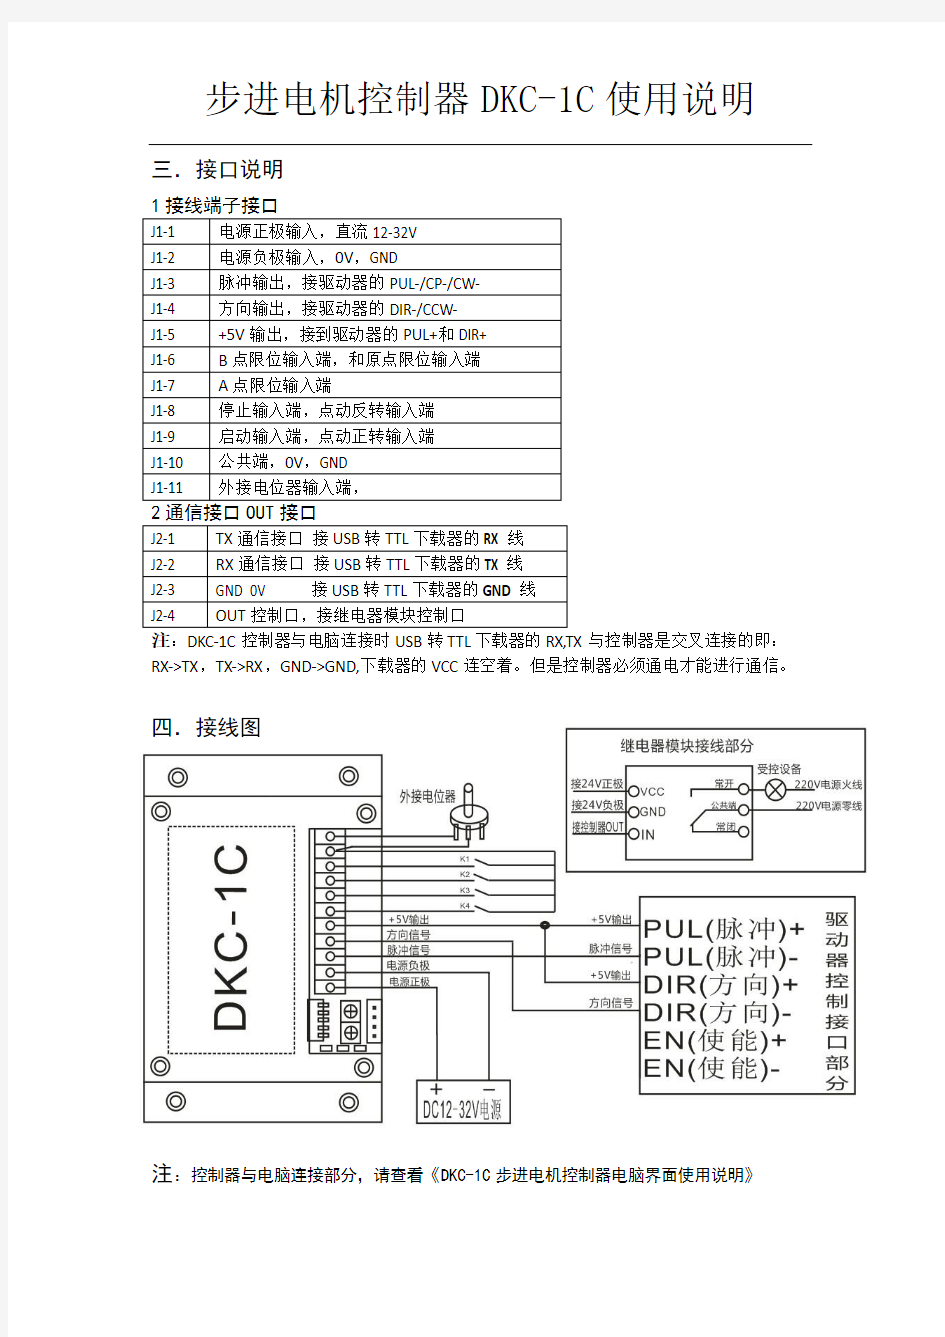 DKC-1C说明书